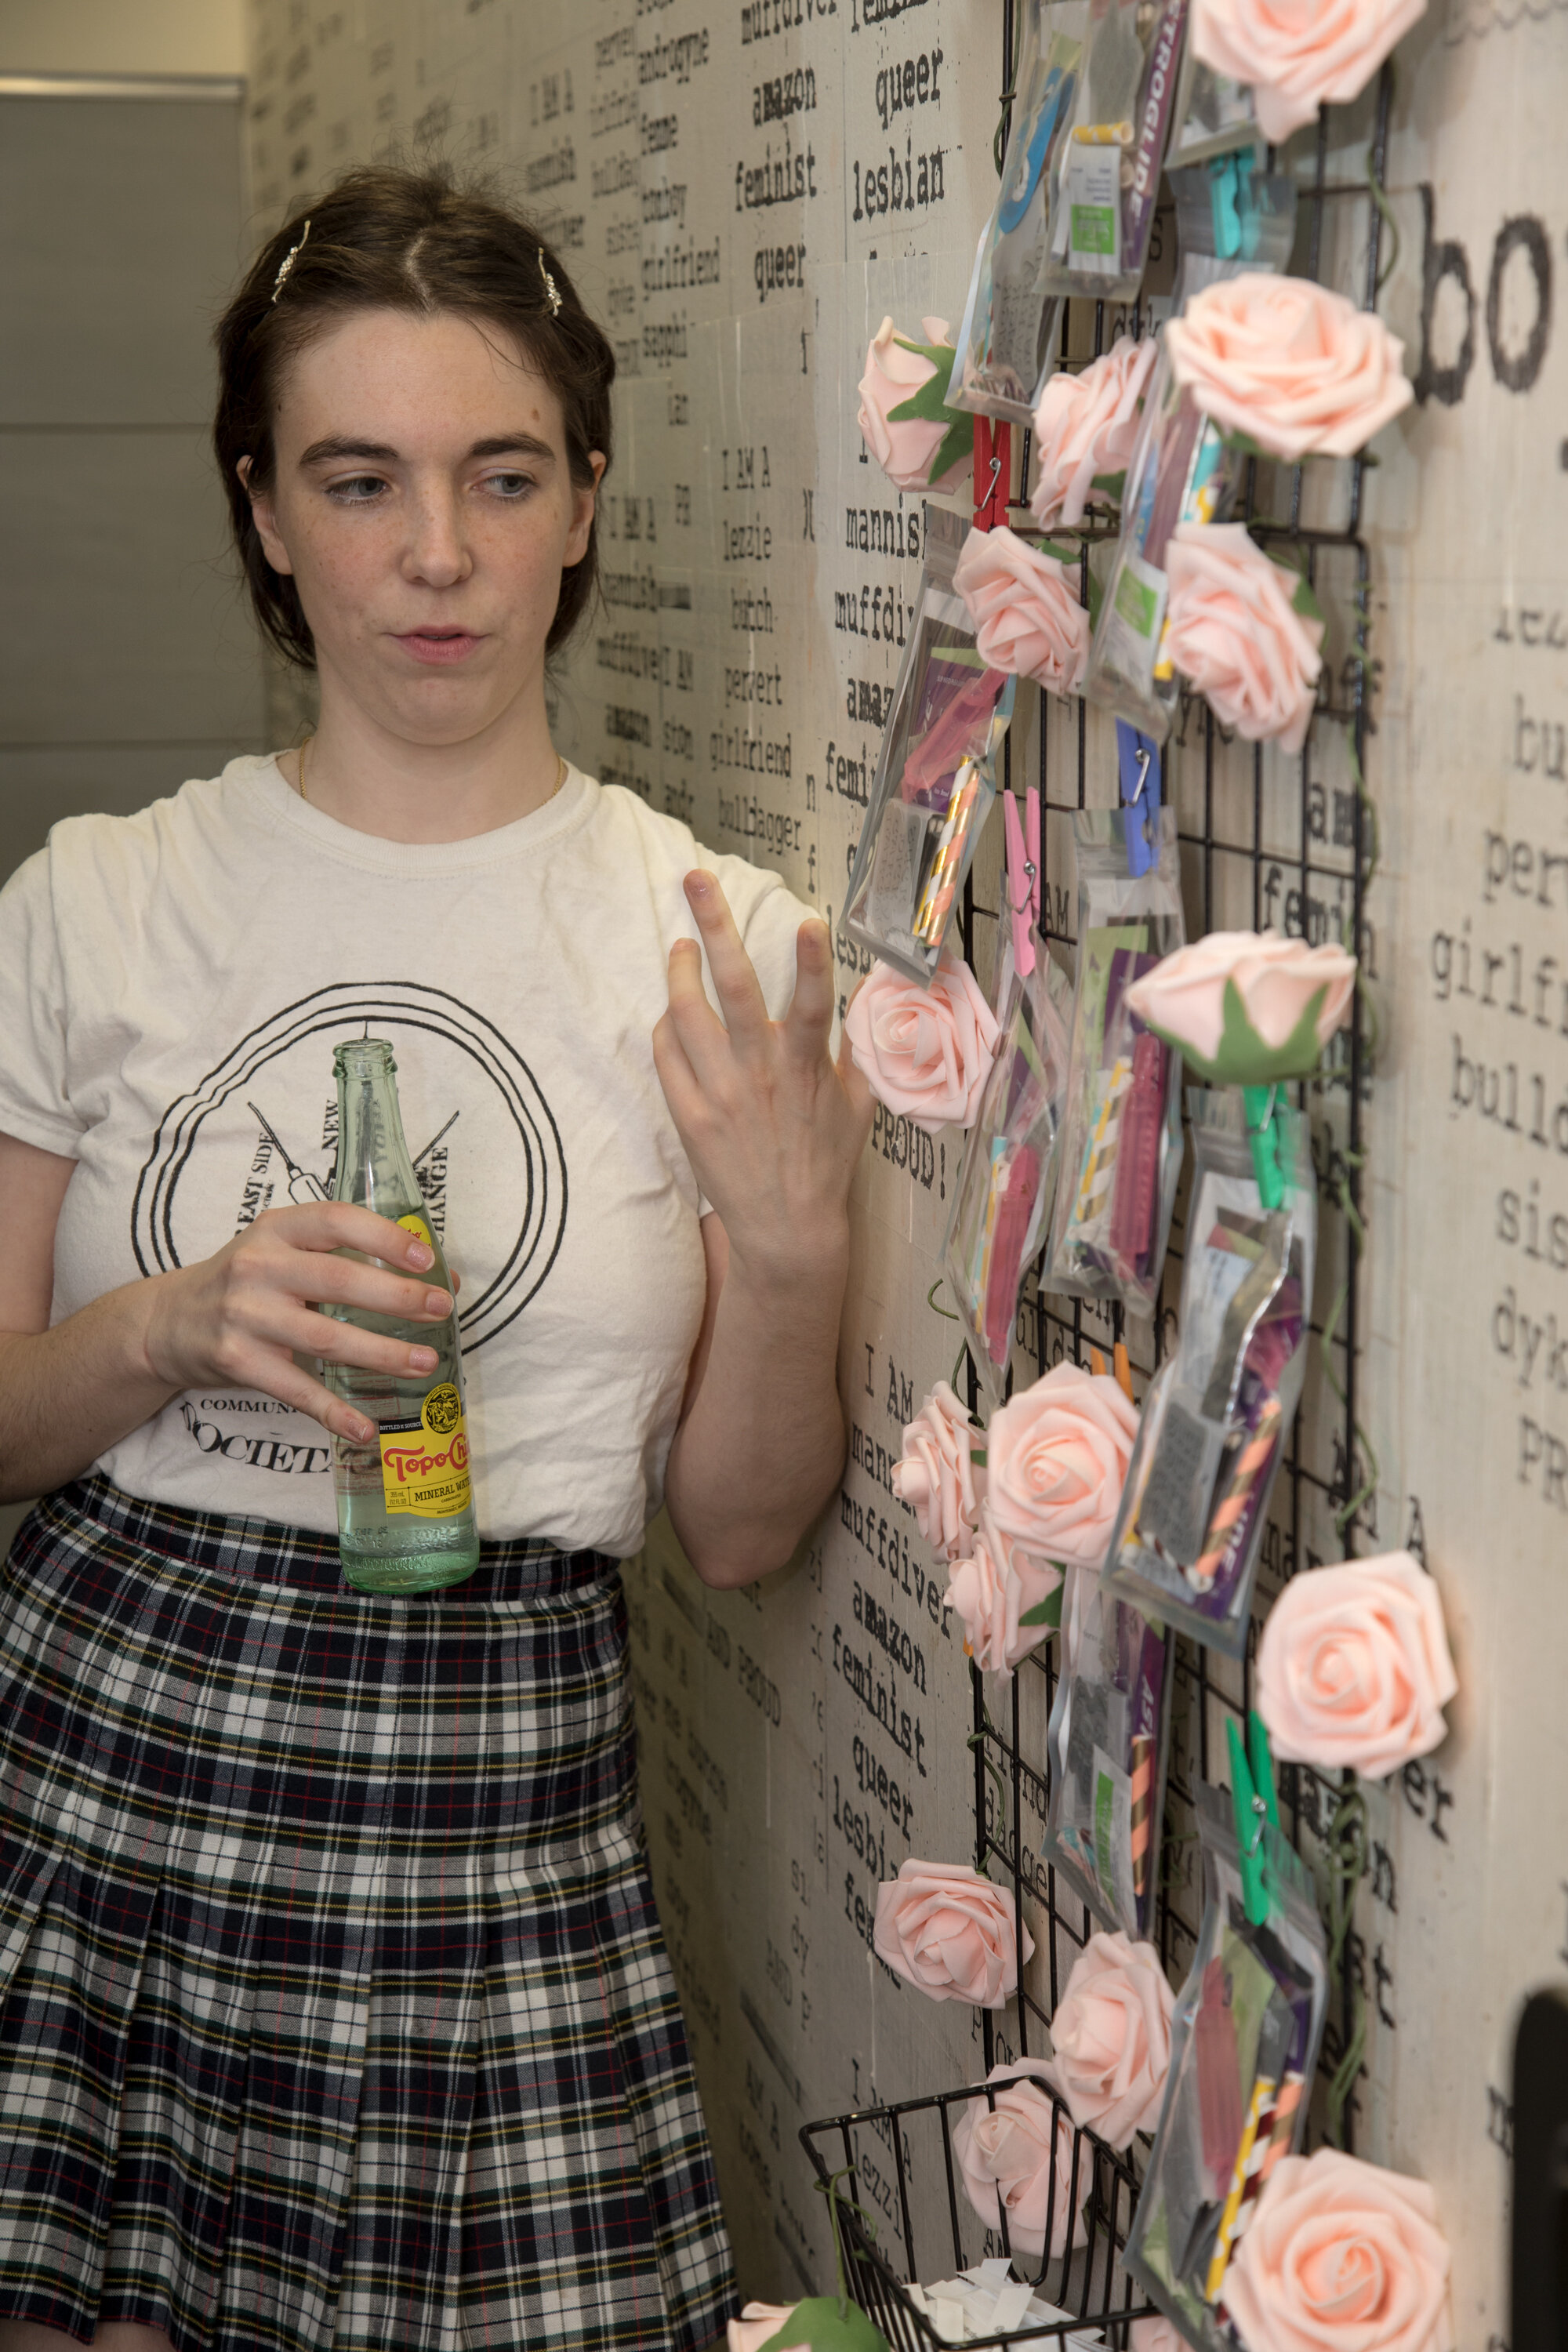 Bathroom installation at The Lesbian, Gay, Bisexual, Transgender Community Center as part of the 2018-2019 QAM Annual entitled "harmreduxxxcommunism" by Ripley Soprano (photo by Cayetana Suzuki)